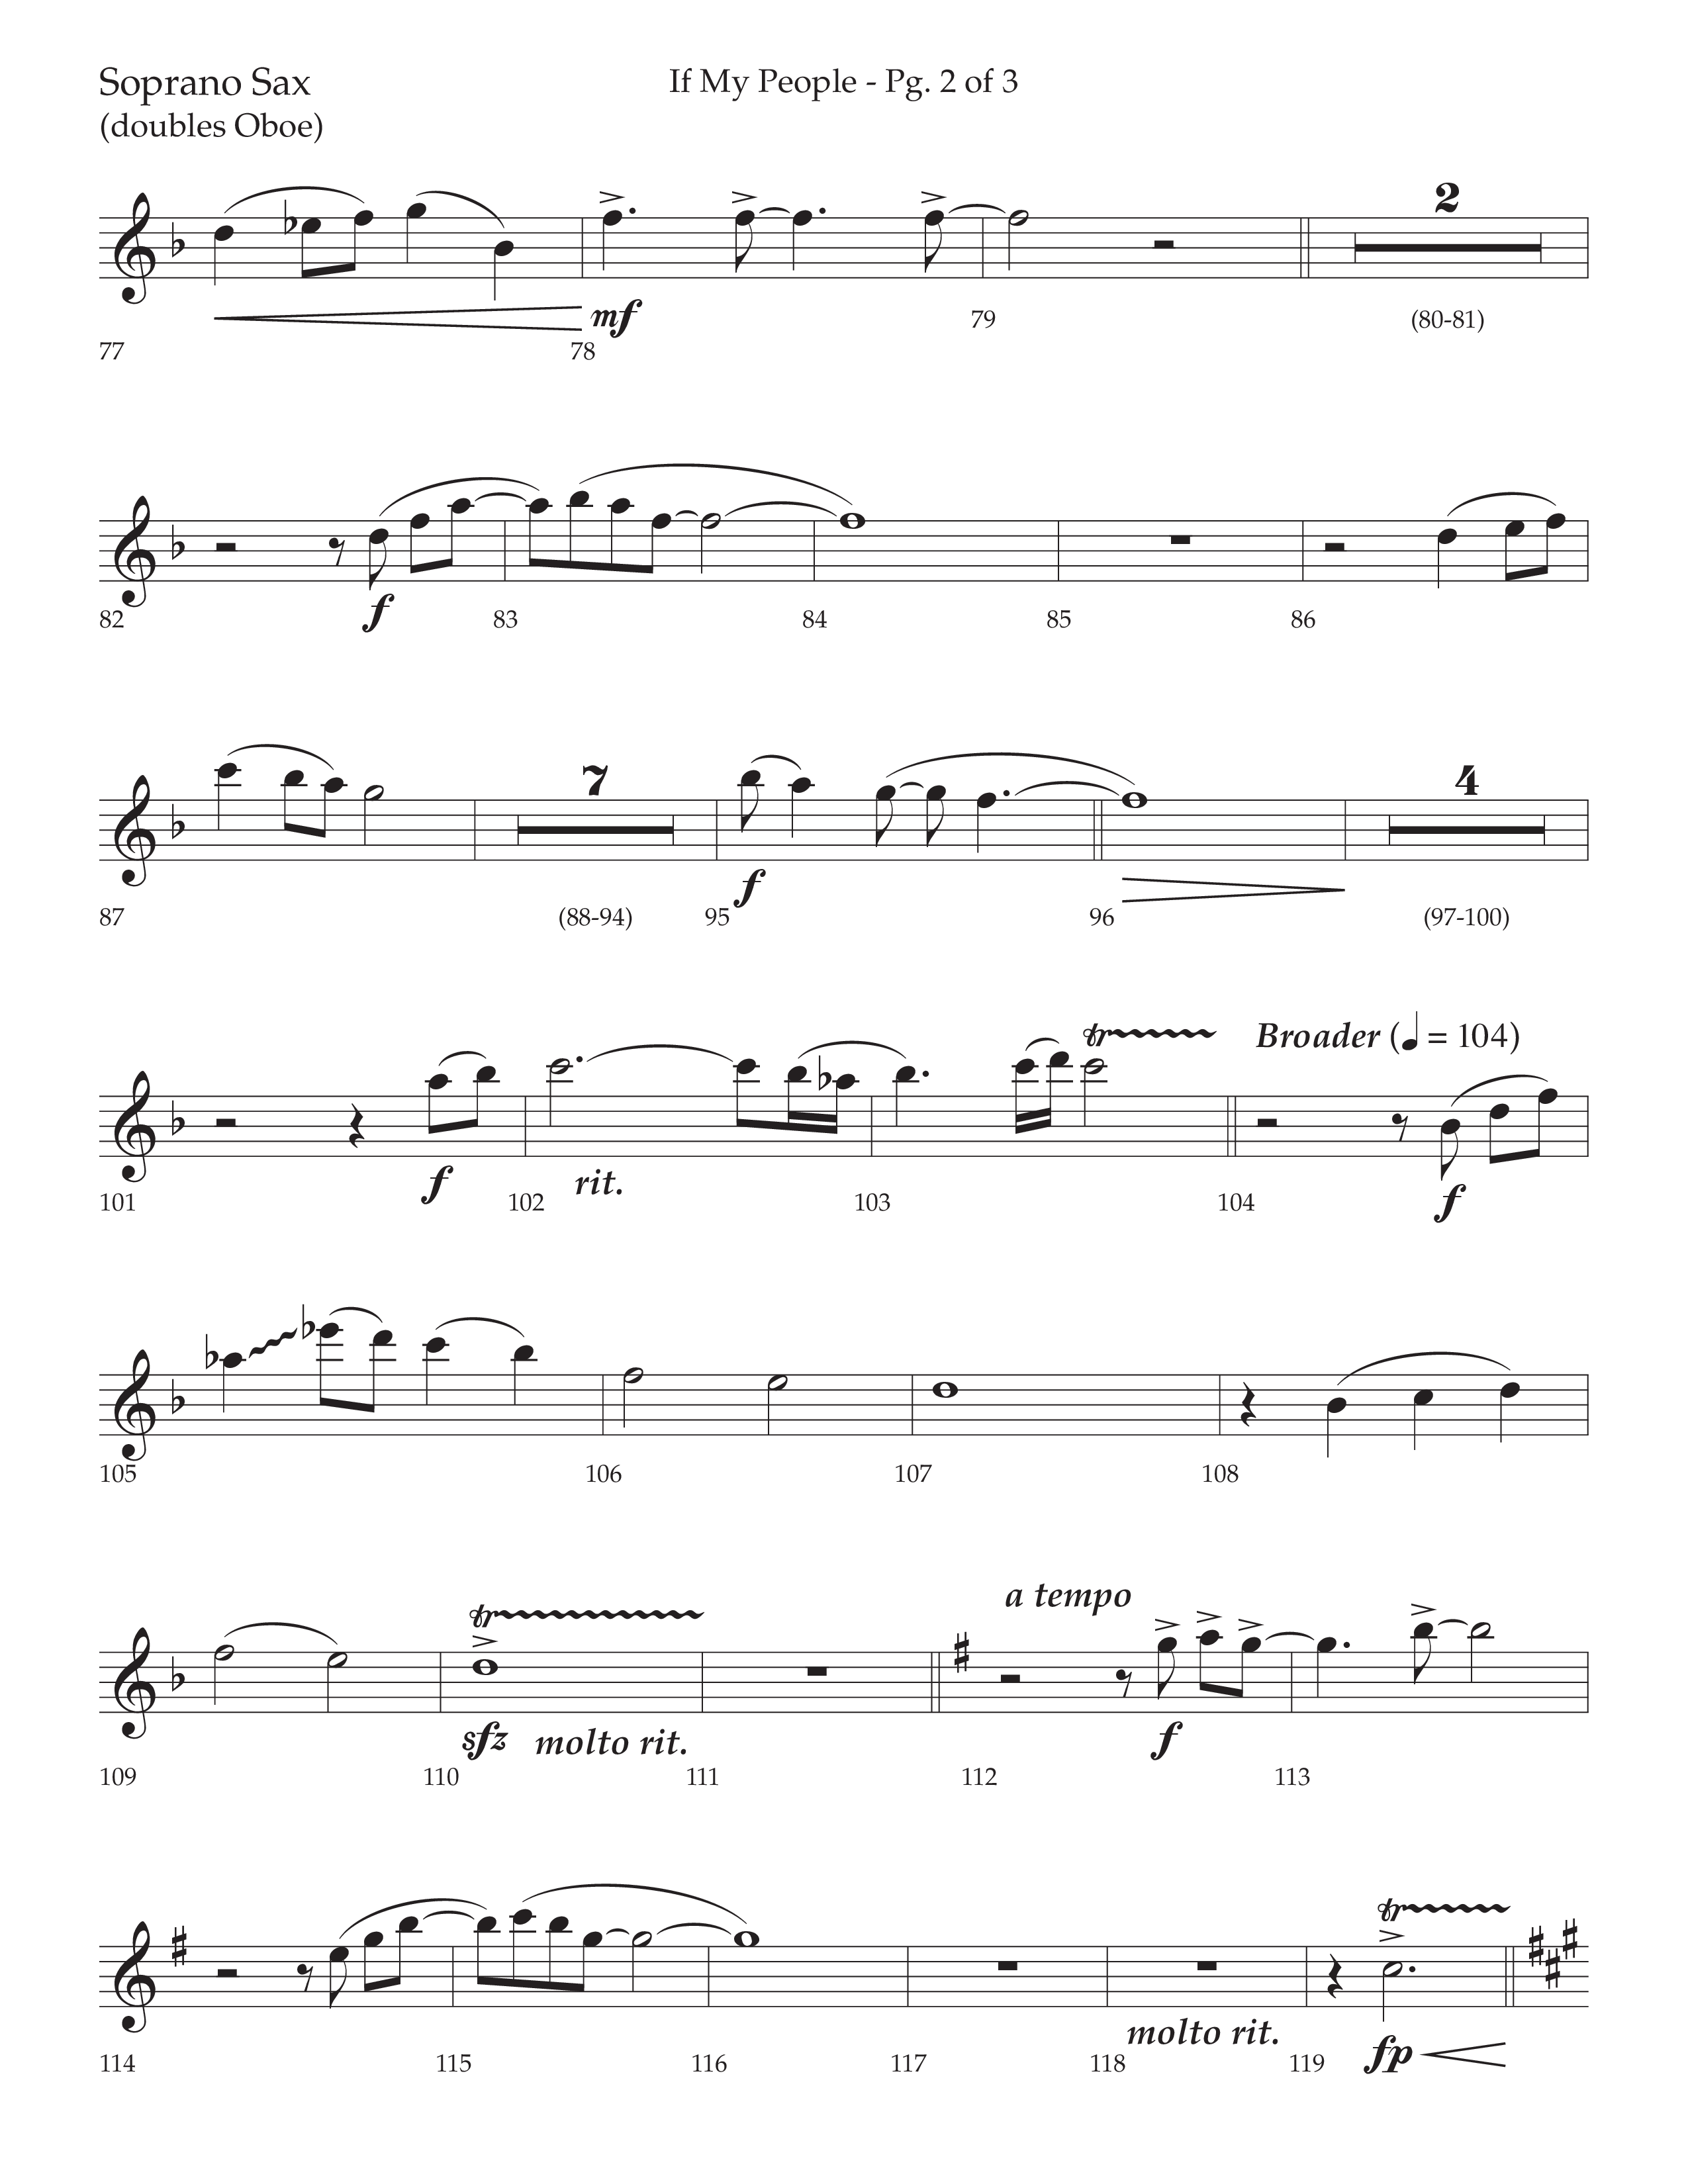 If My People (Choral Anthem SATB) Soprano Sax (Lifeway Choral / Arr. David Wise / Orch. David Shipps)